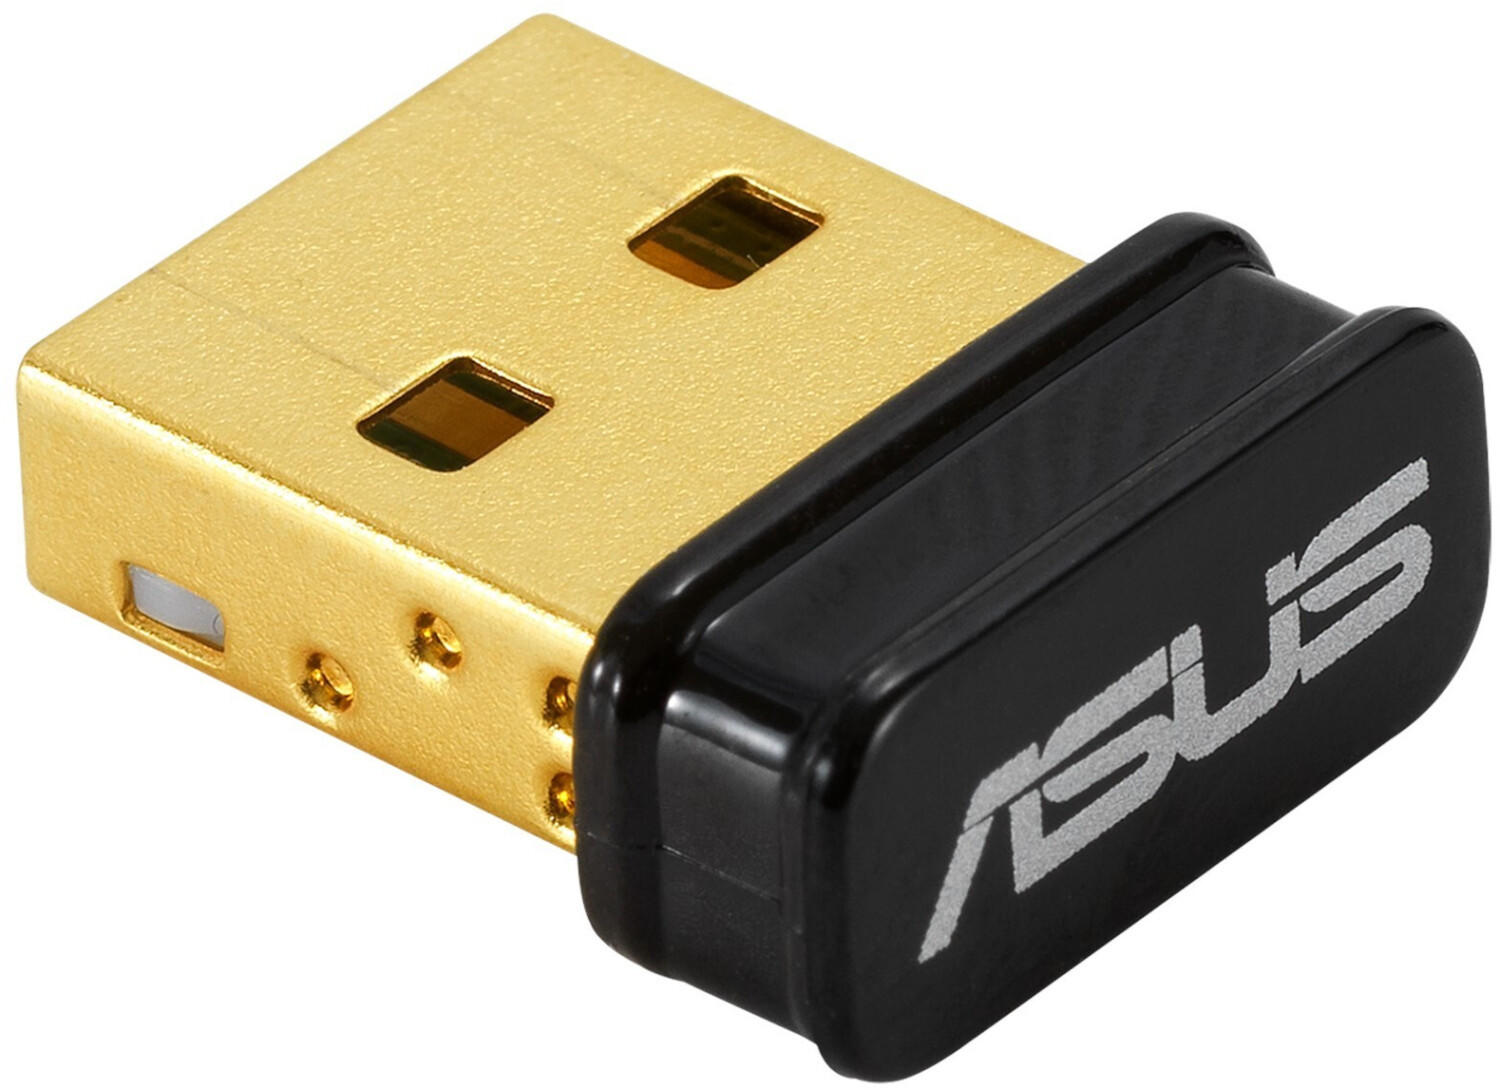 Asus USB-BT500 Test: ❤️ TOP Angebote ab 12,50 € (Mai 2022) Testbericht.de